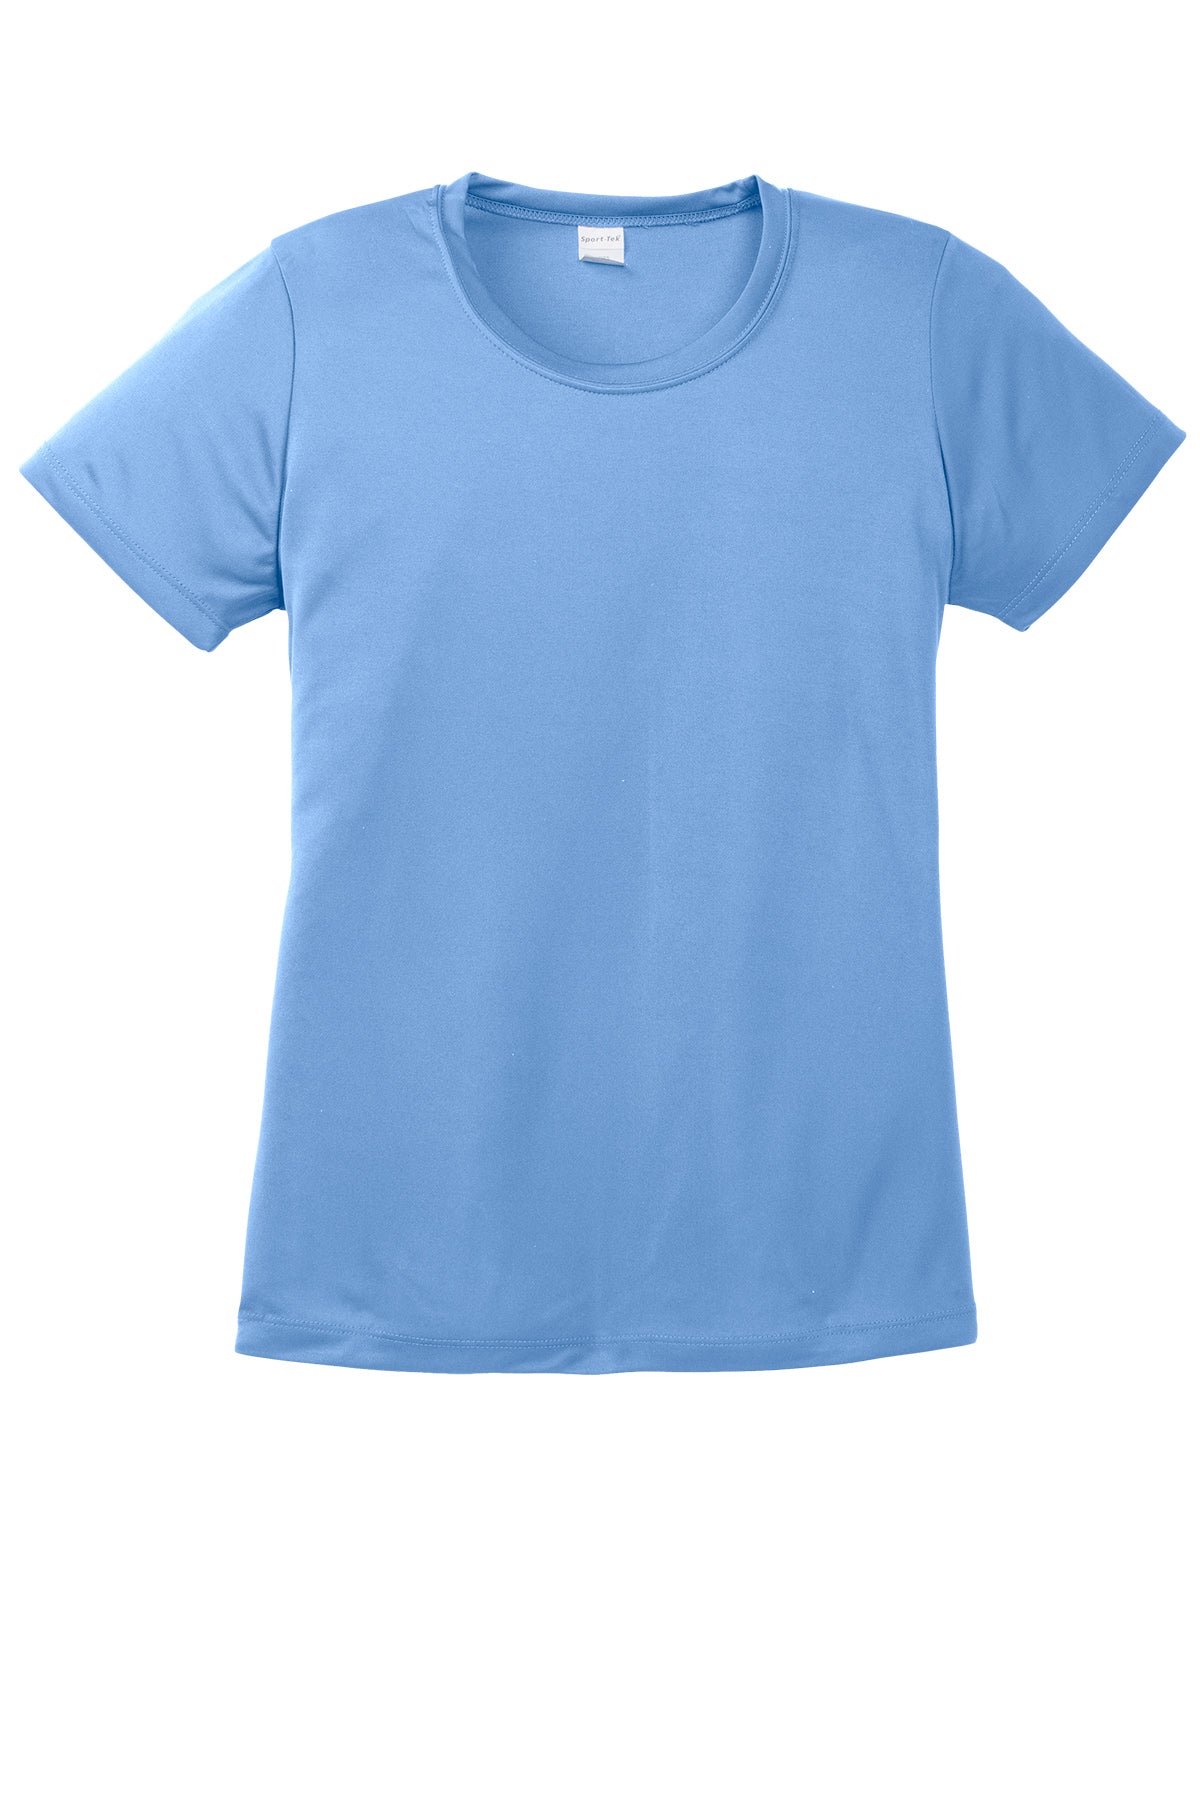 Sport-Tek Lst350 Polyester Ladies T-Shirt Ad Small / Carolina Blue